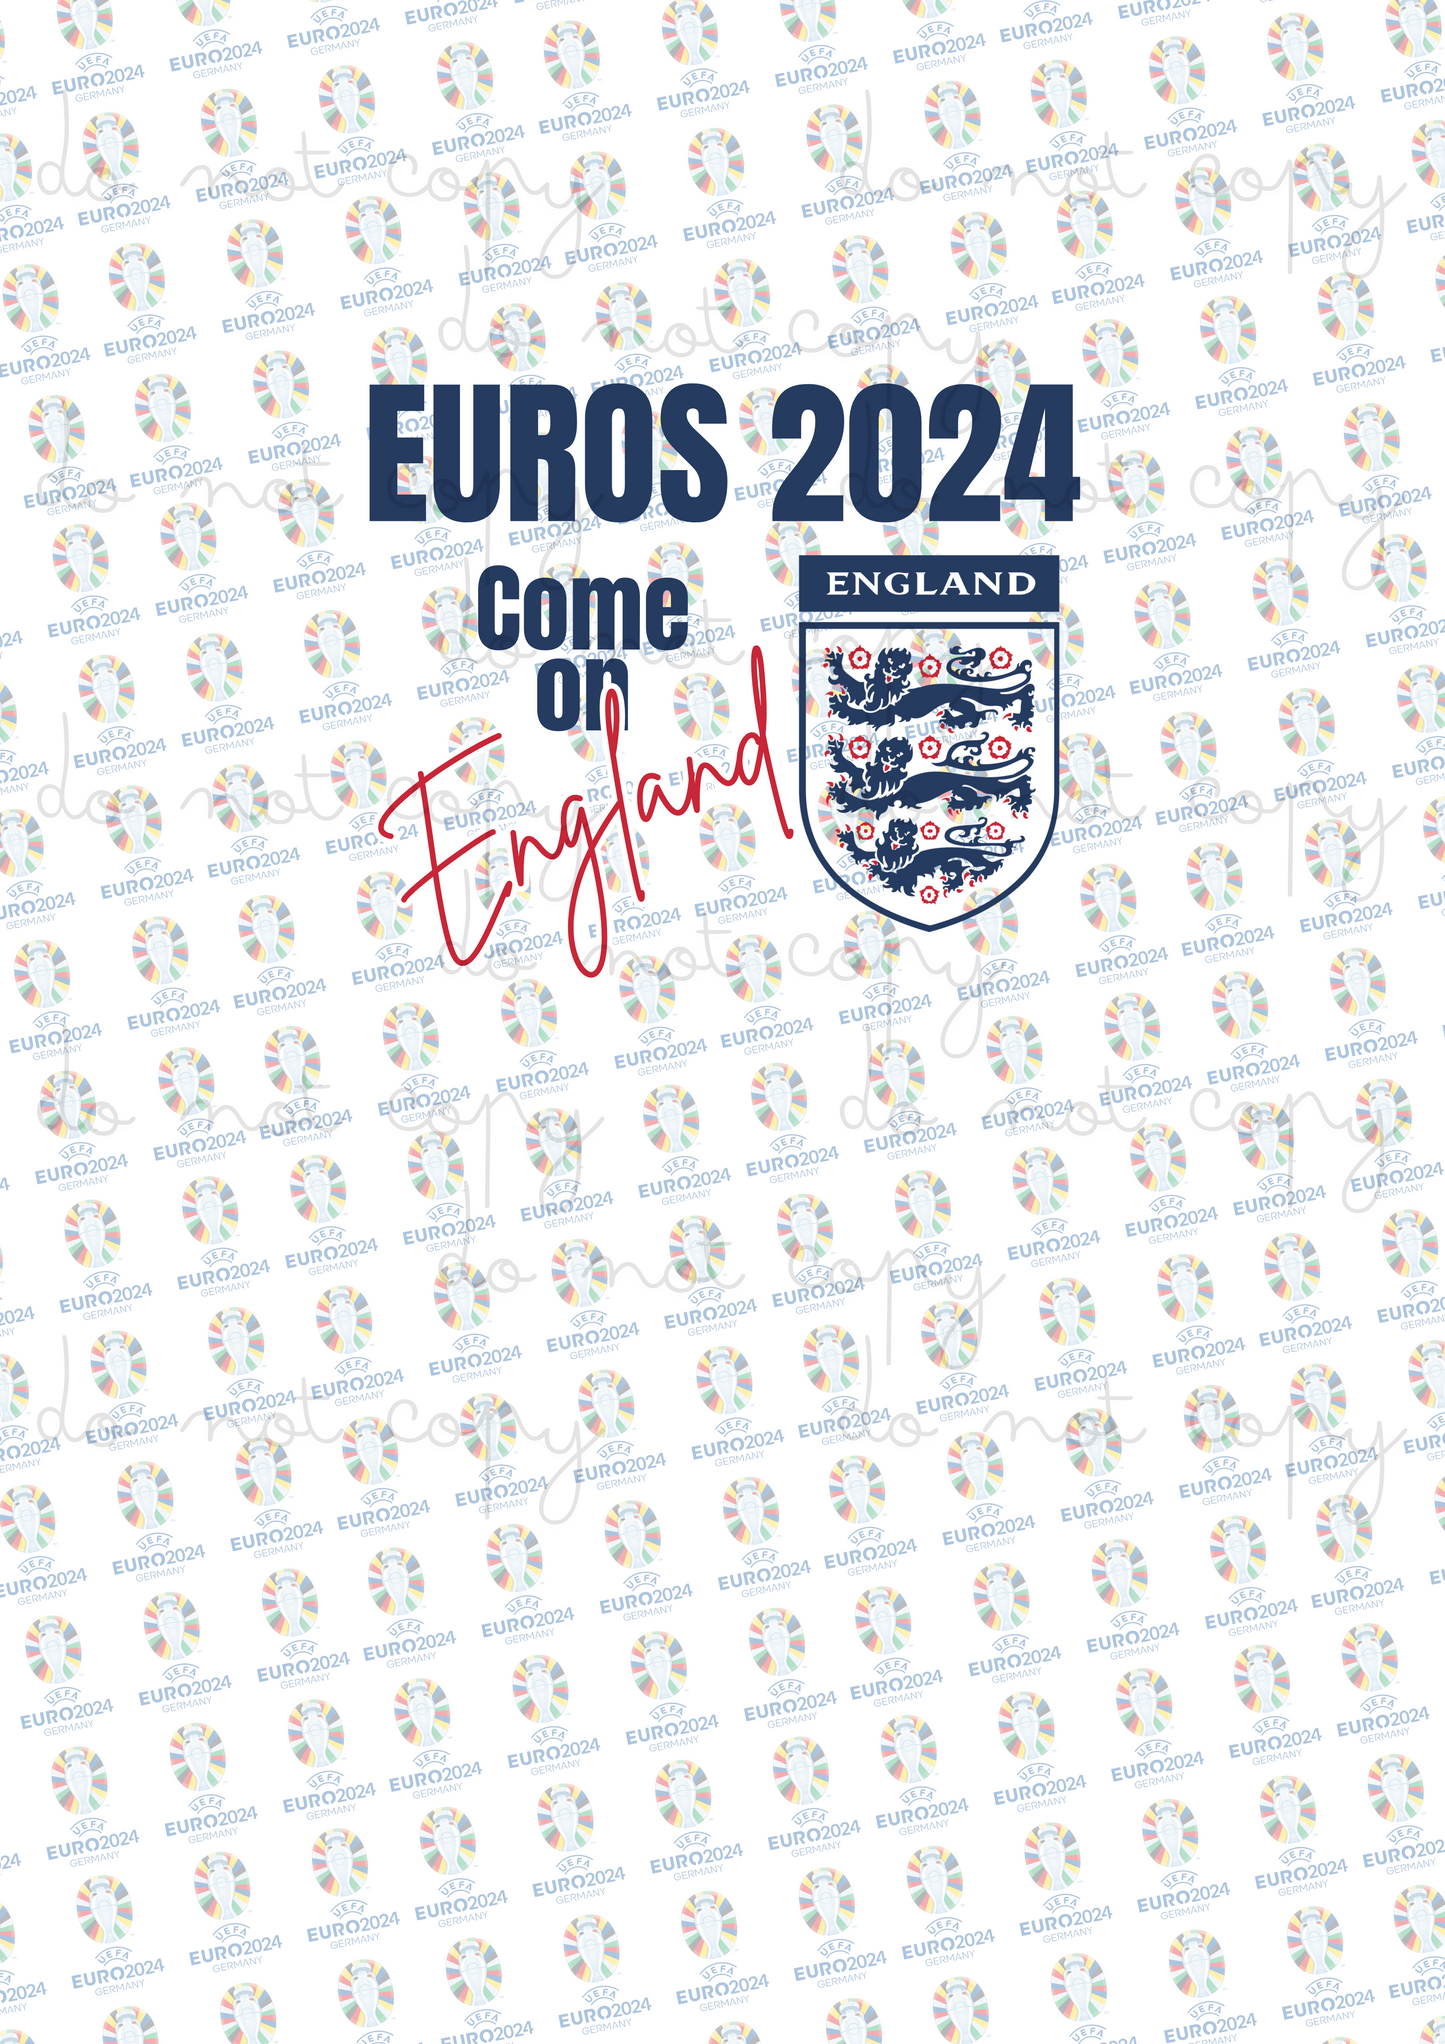 Come On England | Euros 2024 | DTF transfer